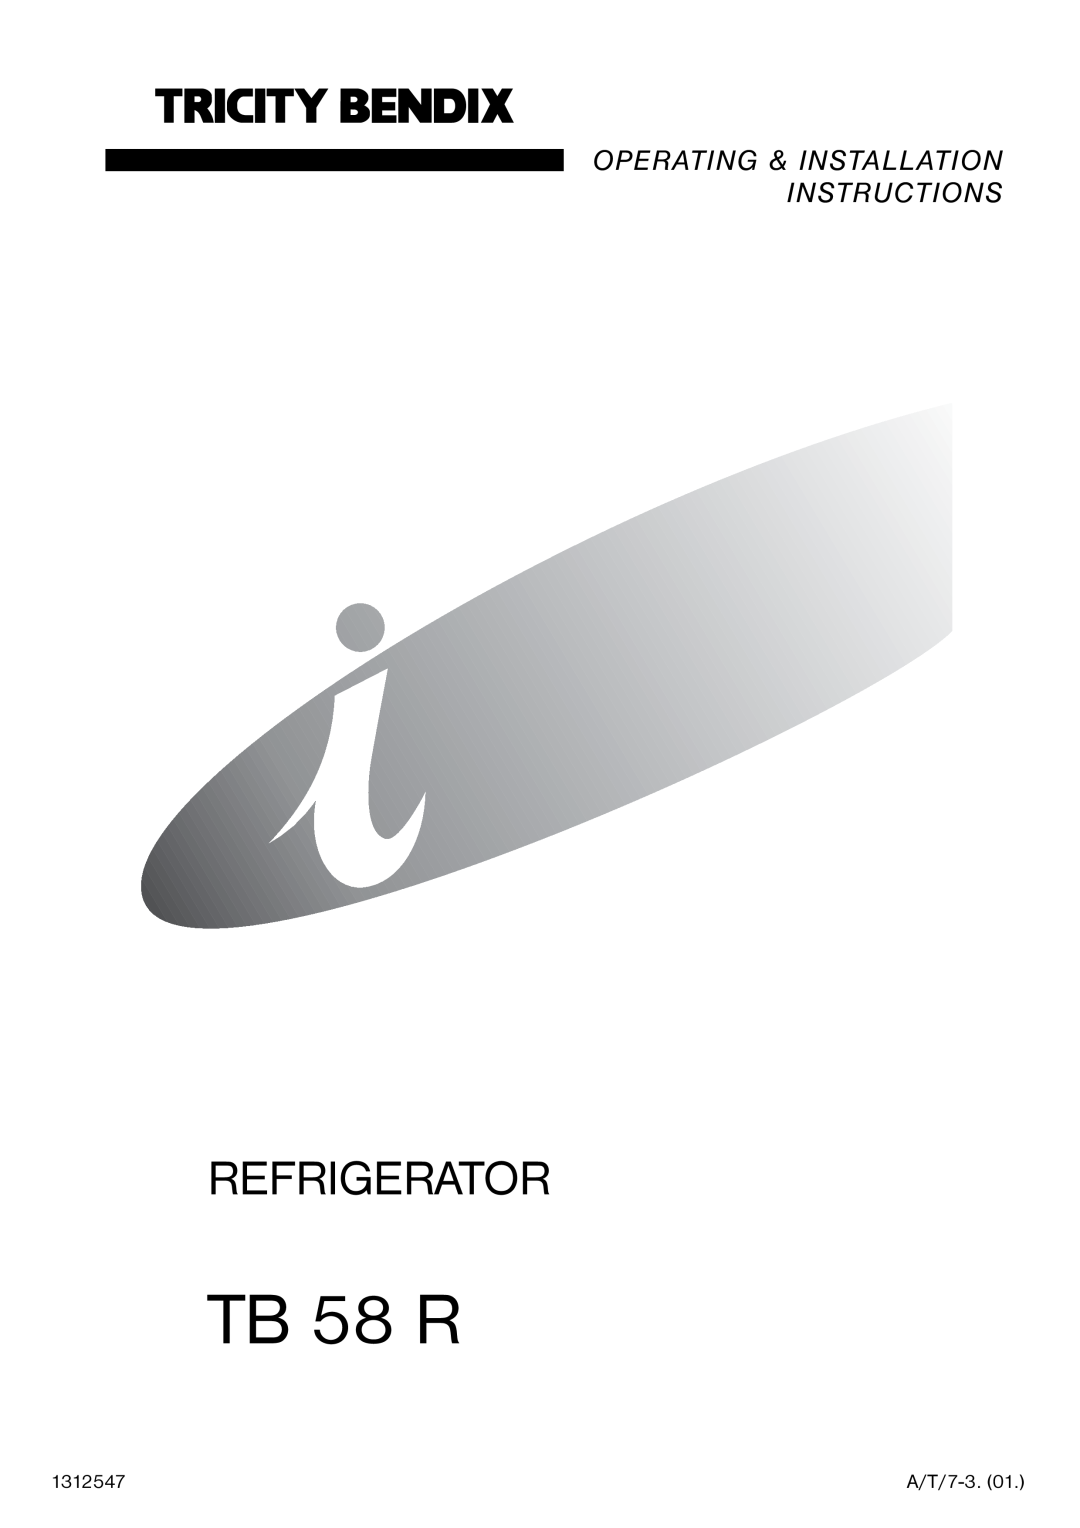 Tricity Bendix TB 58 R installation instructions Refrigerator, Operating & Installation Instructions 